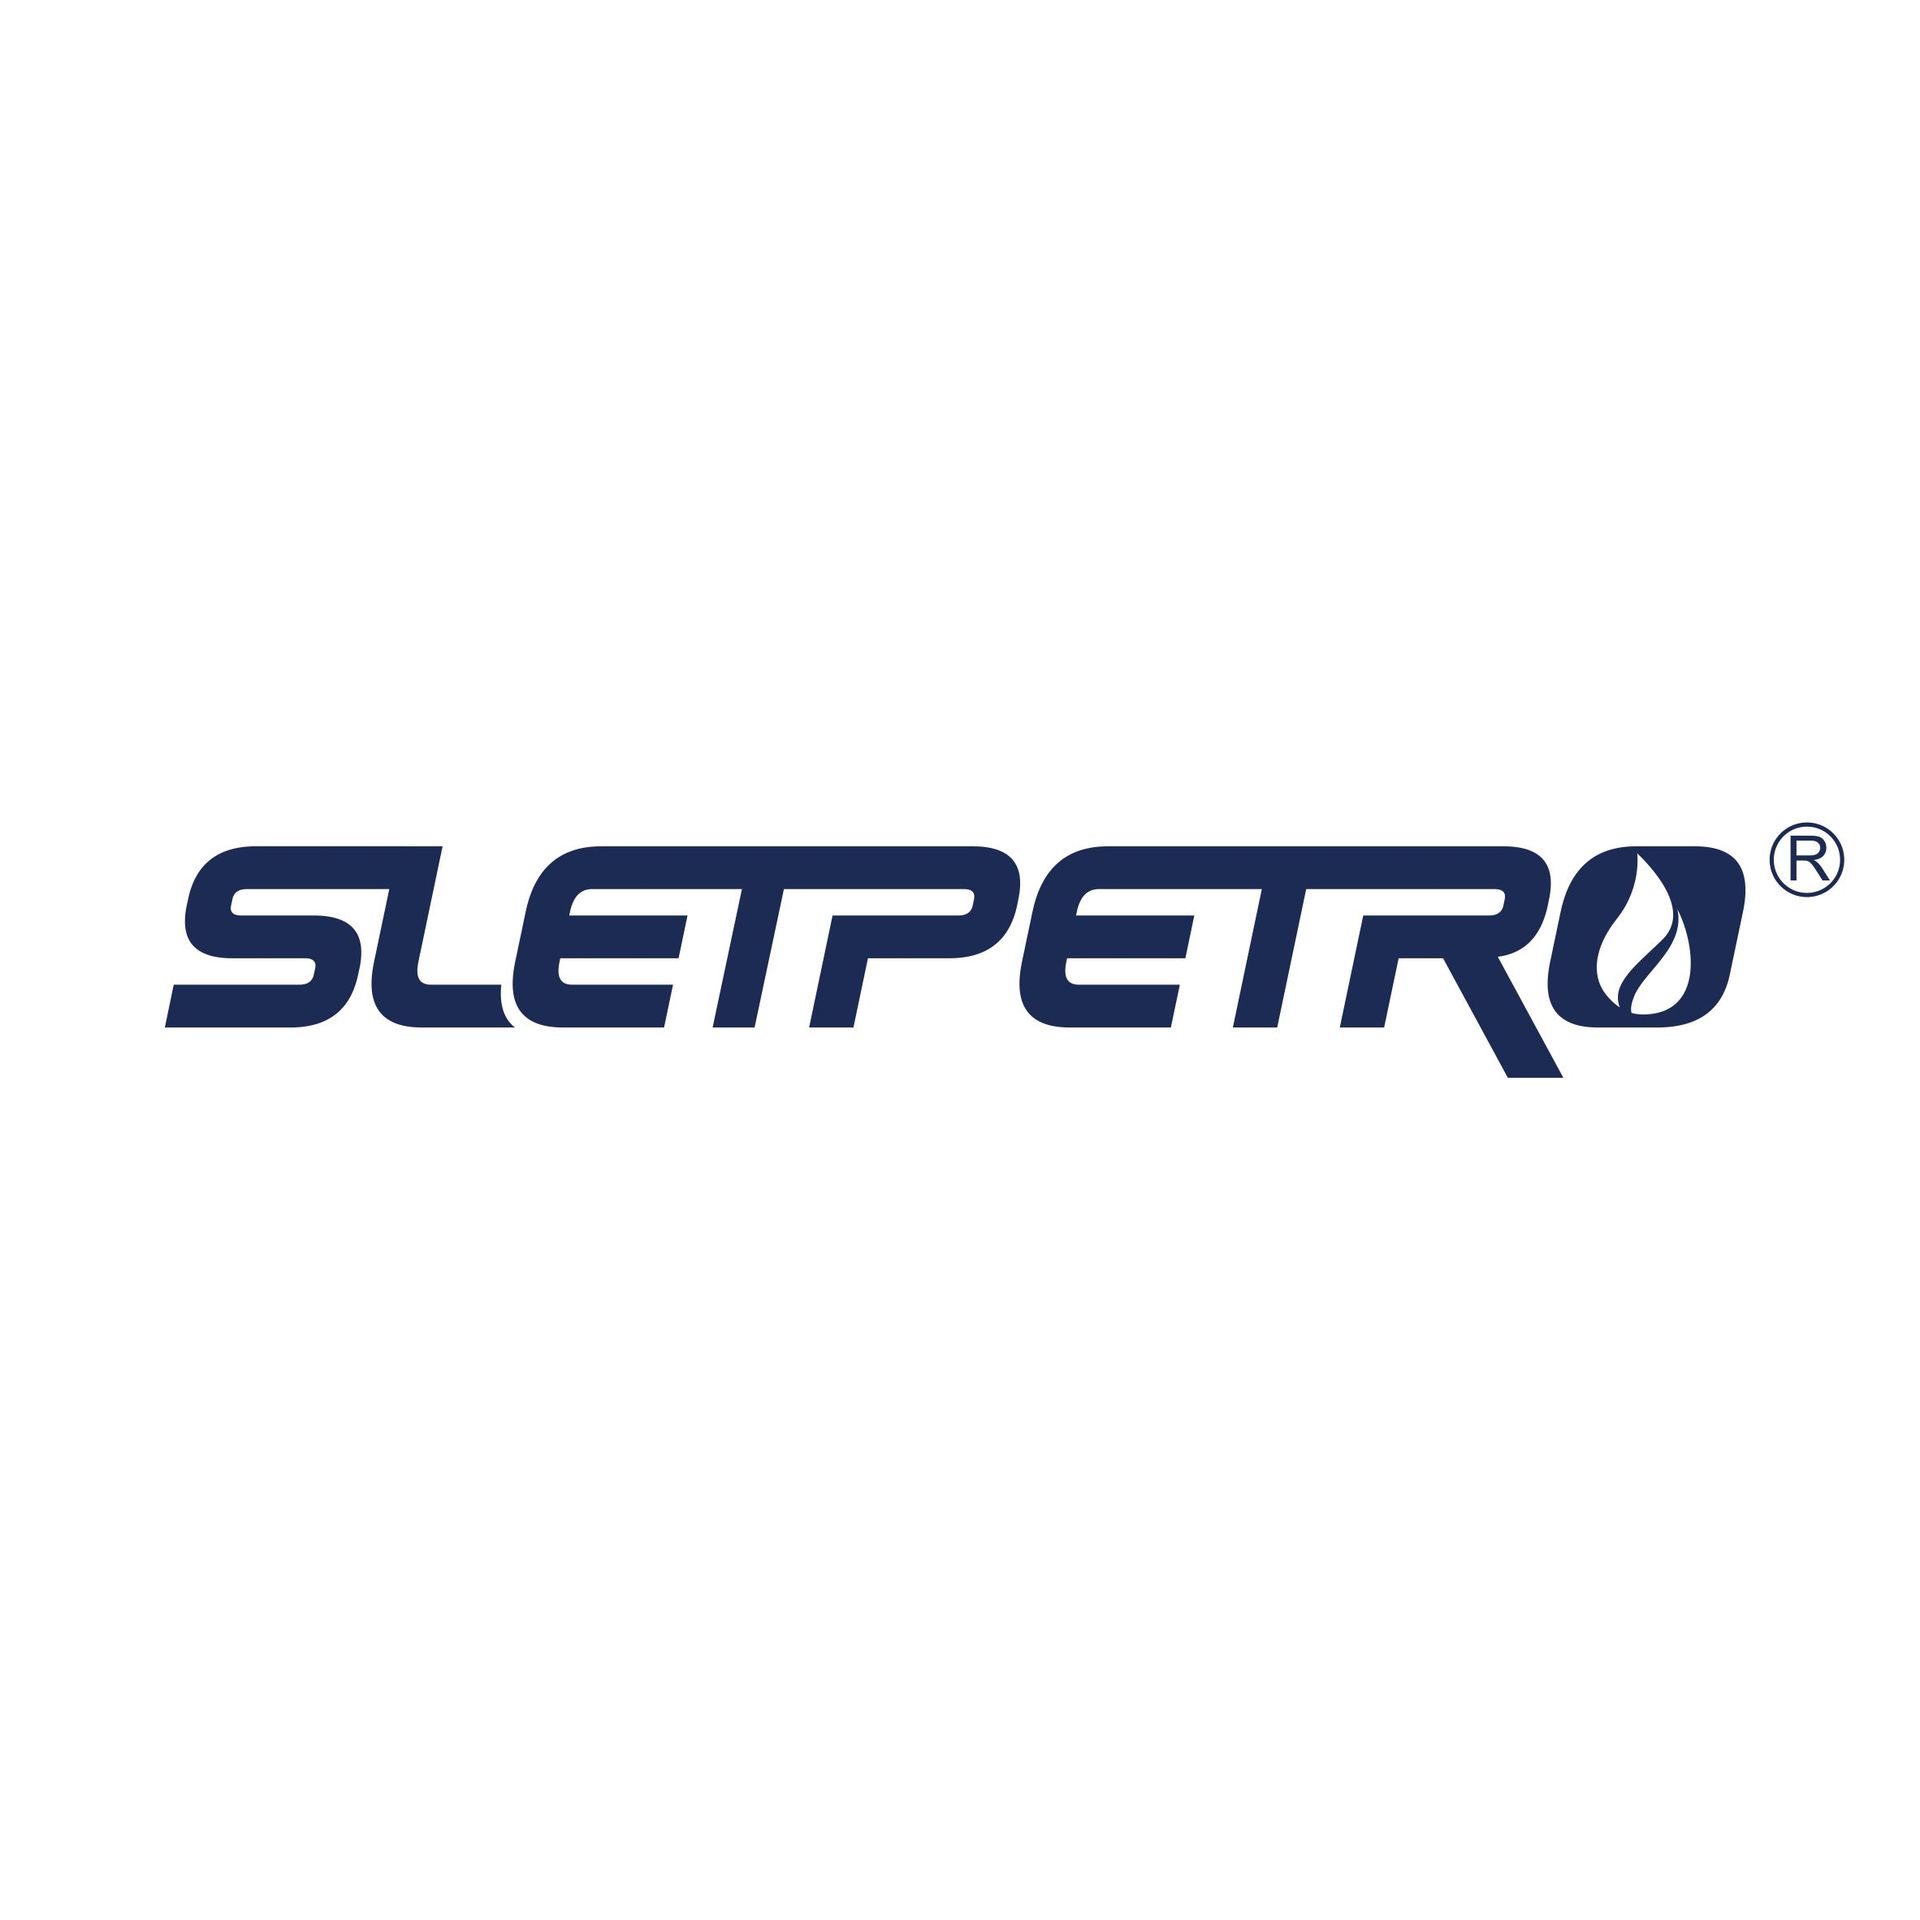 Hubei Sletpetro Technology Co., Ltd. logo